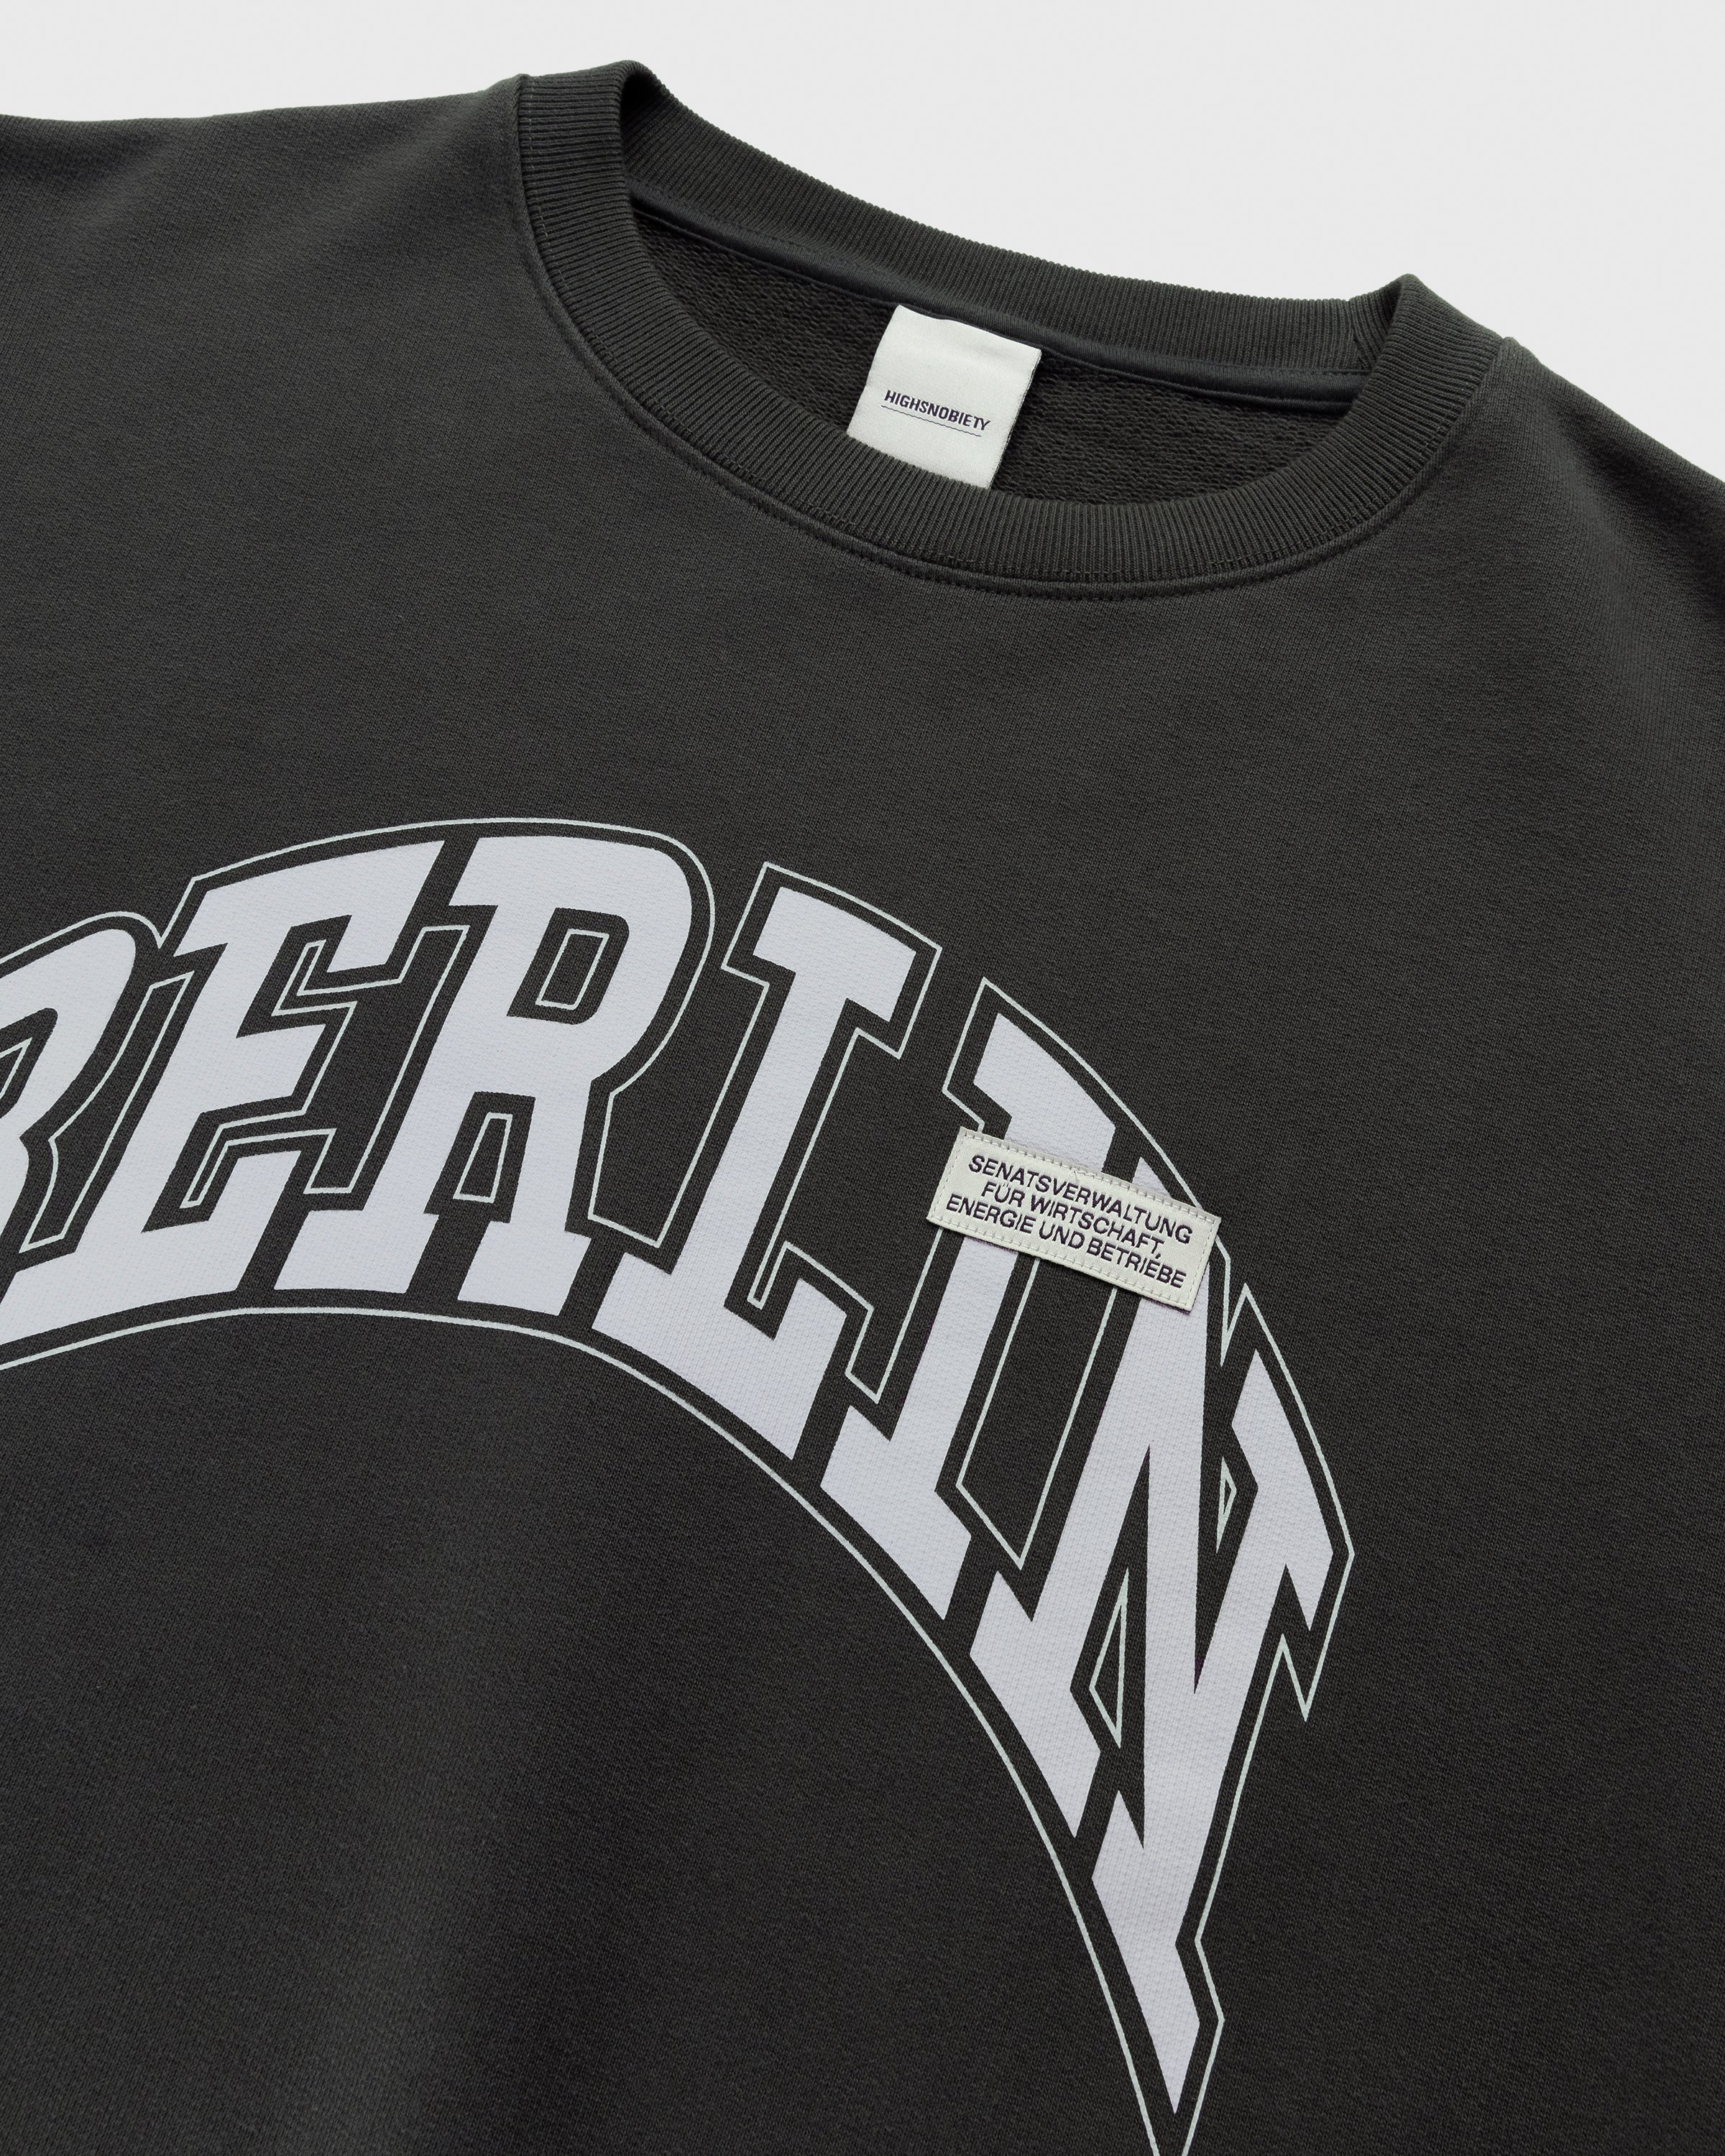 Highsnobiety - BERLIN, BERLIN 3 Crewneck Black - Clothing - Black - Image 5